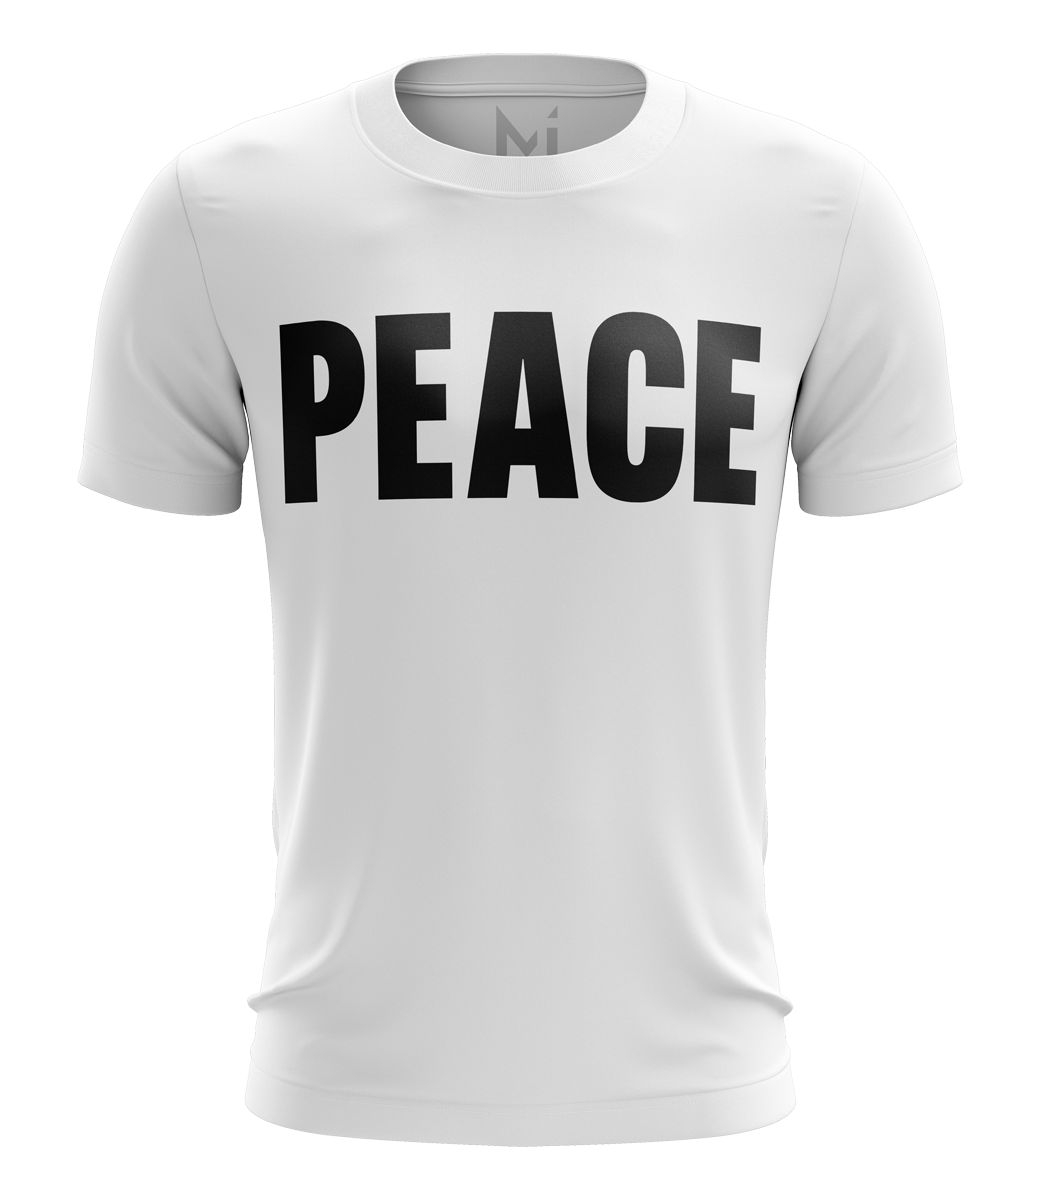 Sarah Connor T-Shirt PEACE weiß